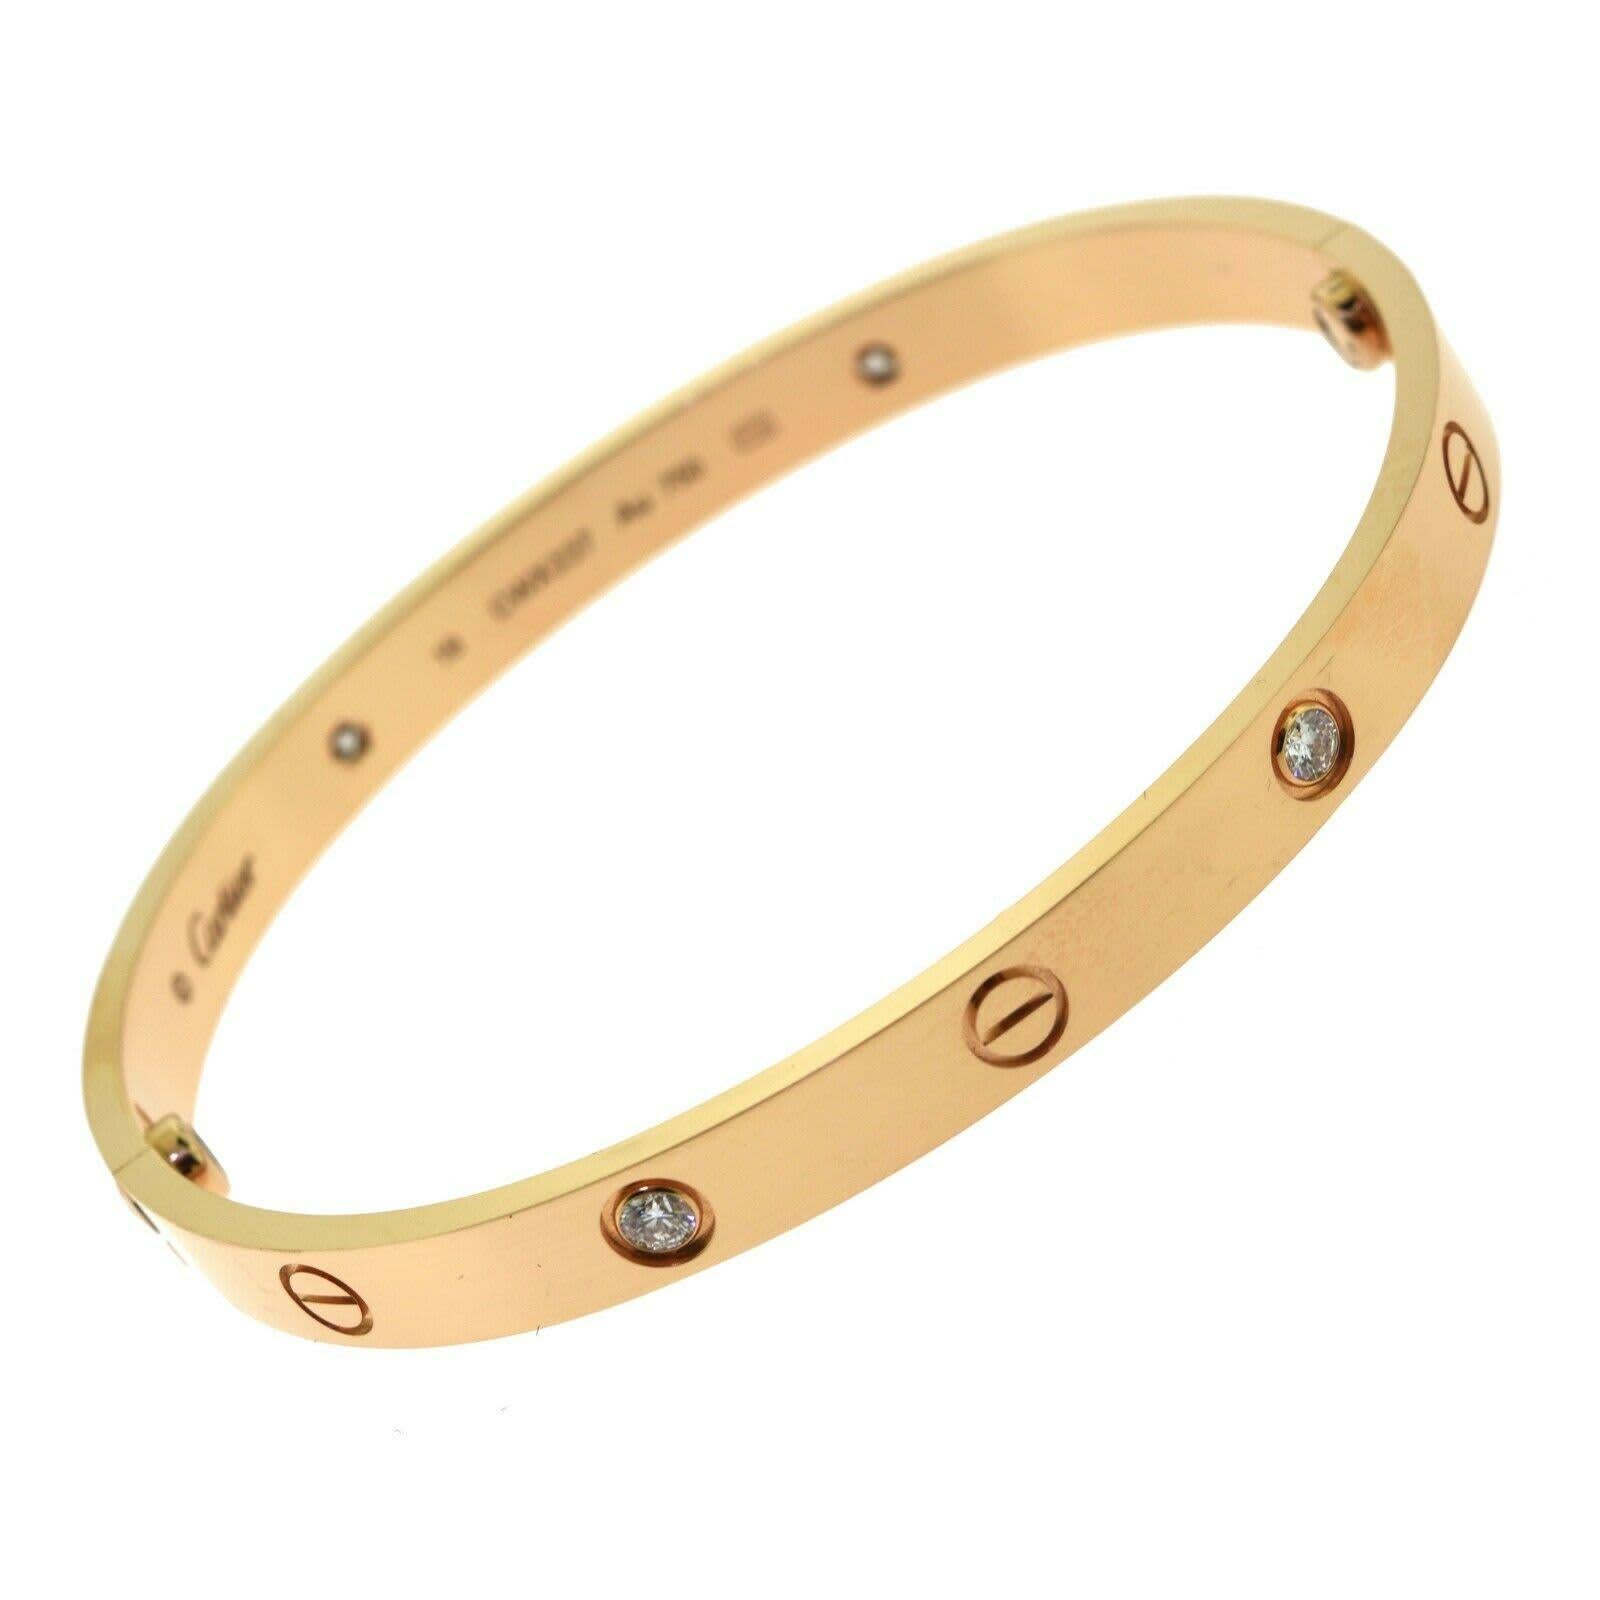 Designer: Cartier

Collection: LOVE

Style: Bracelet 

Metal: Rose  Gold

Metal Purity: 18k

Stones: 4 Round Brilliant CUt Diamonds 

Bracelet Size: 18 = 18 cm

Screw System: New Screw System (screws stay on)

​​​​​​​Includes:  24 Months Brilliance